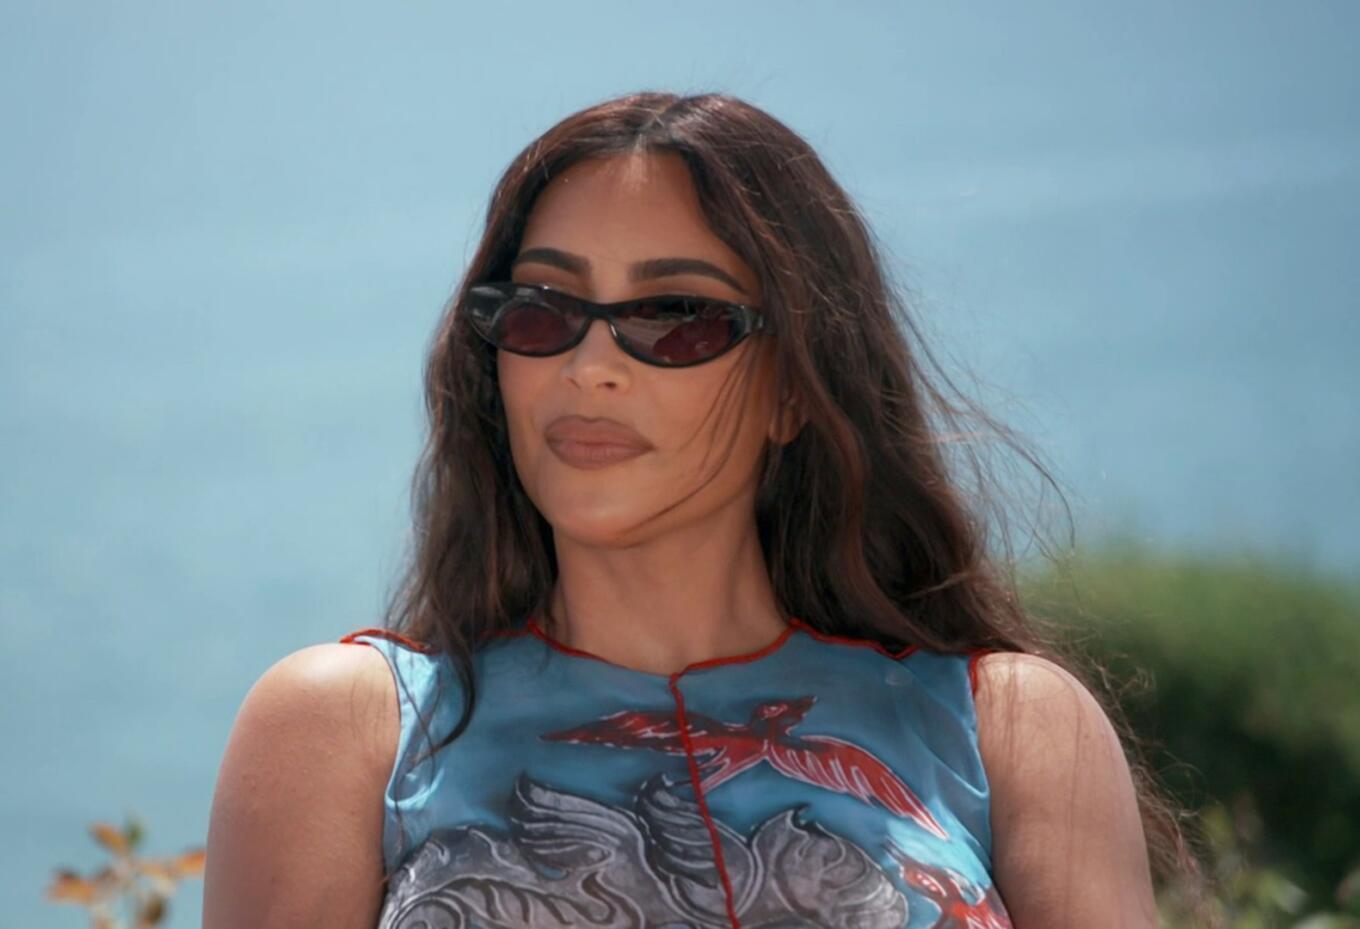 Kim Kardashian - Keeping Up With The Kardashians | Season 20 Episode 5 | Kim Kardashian style